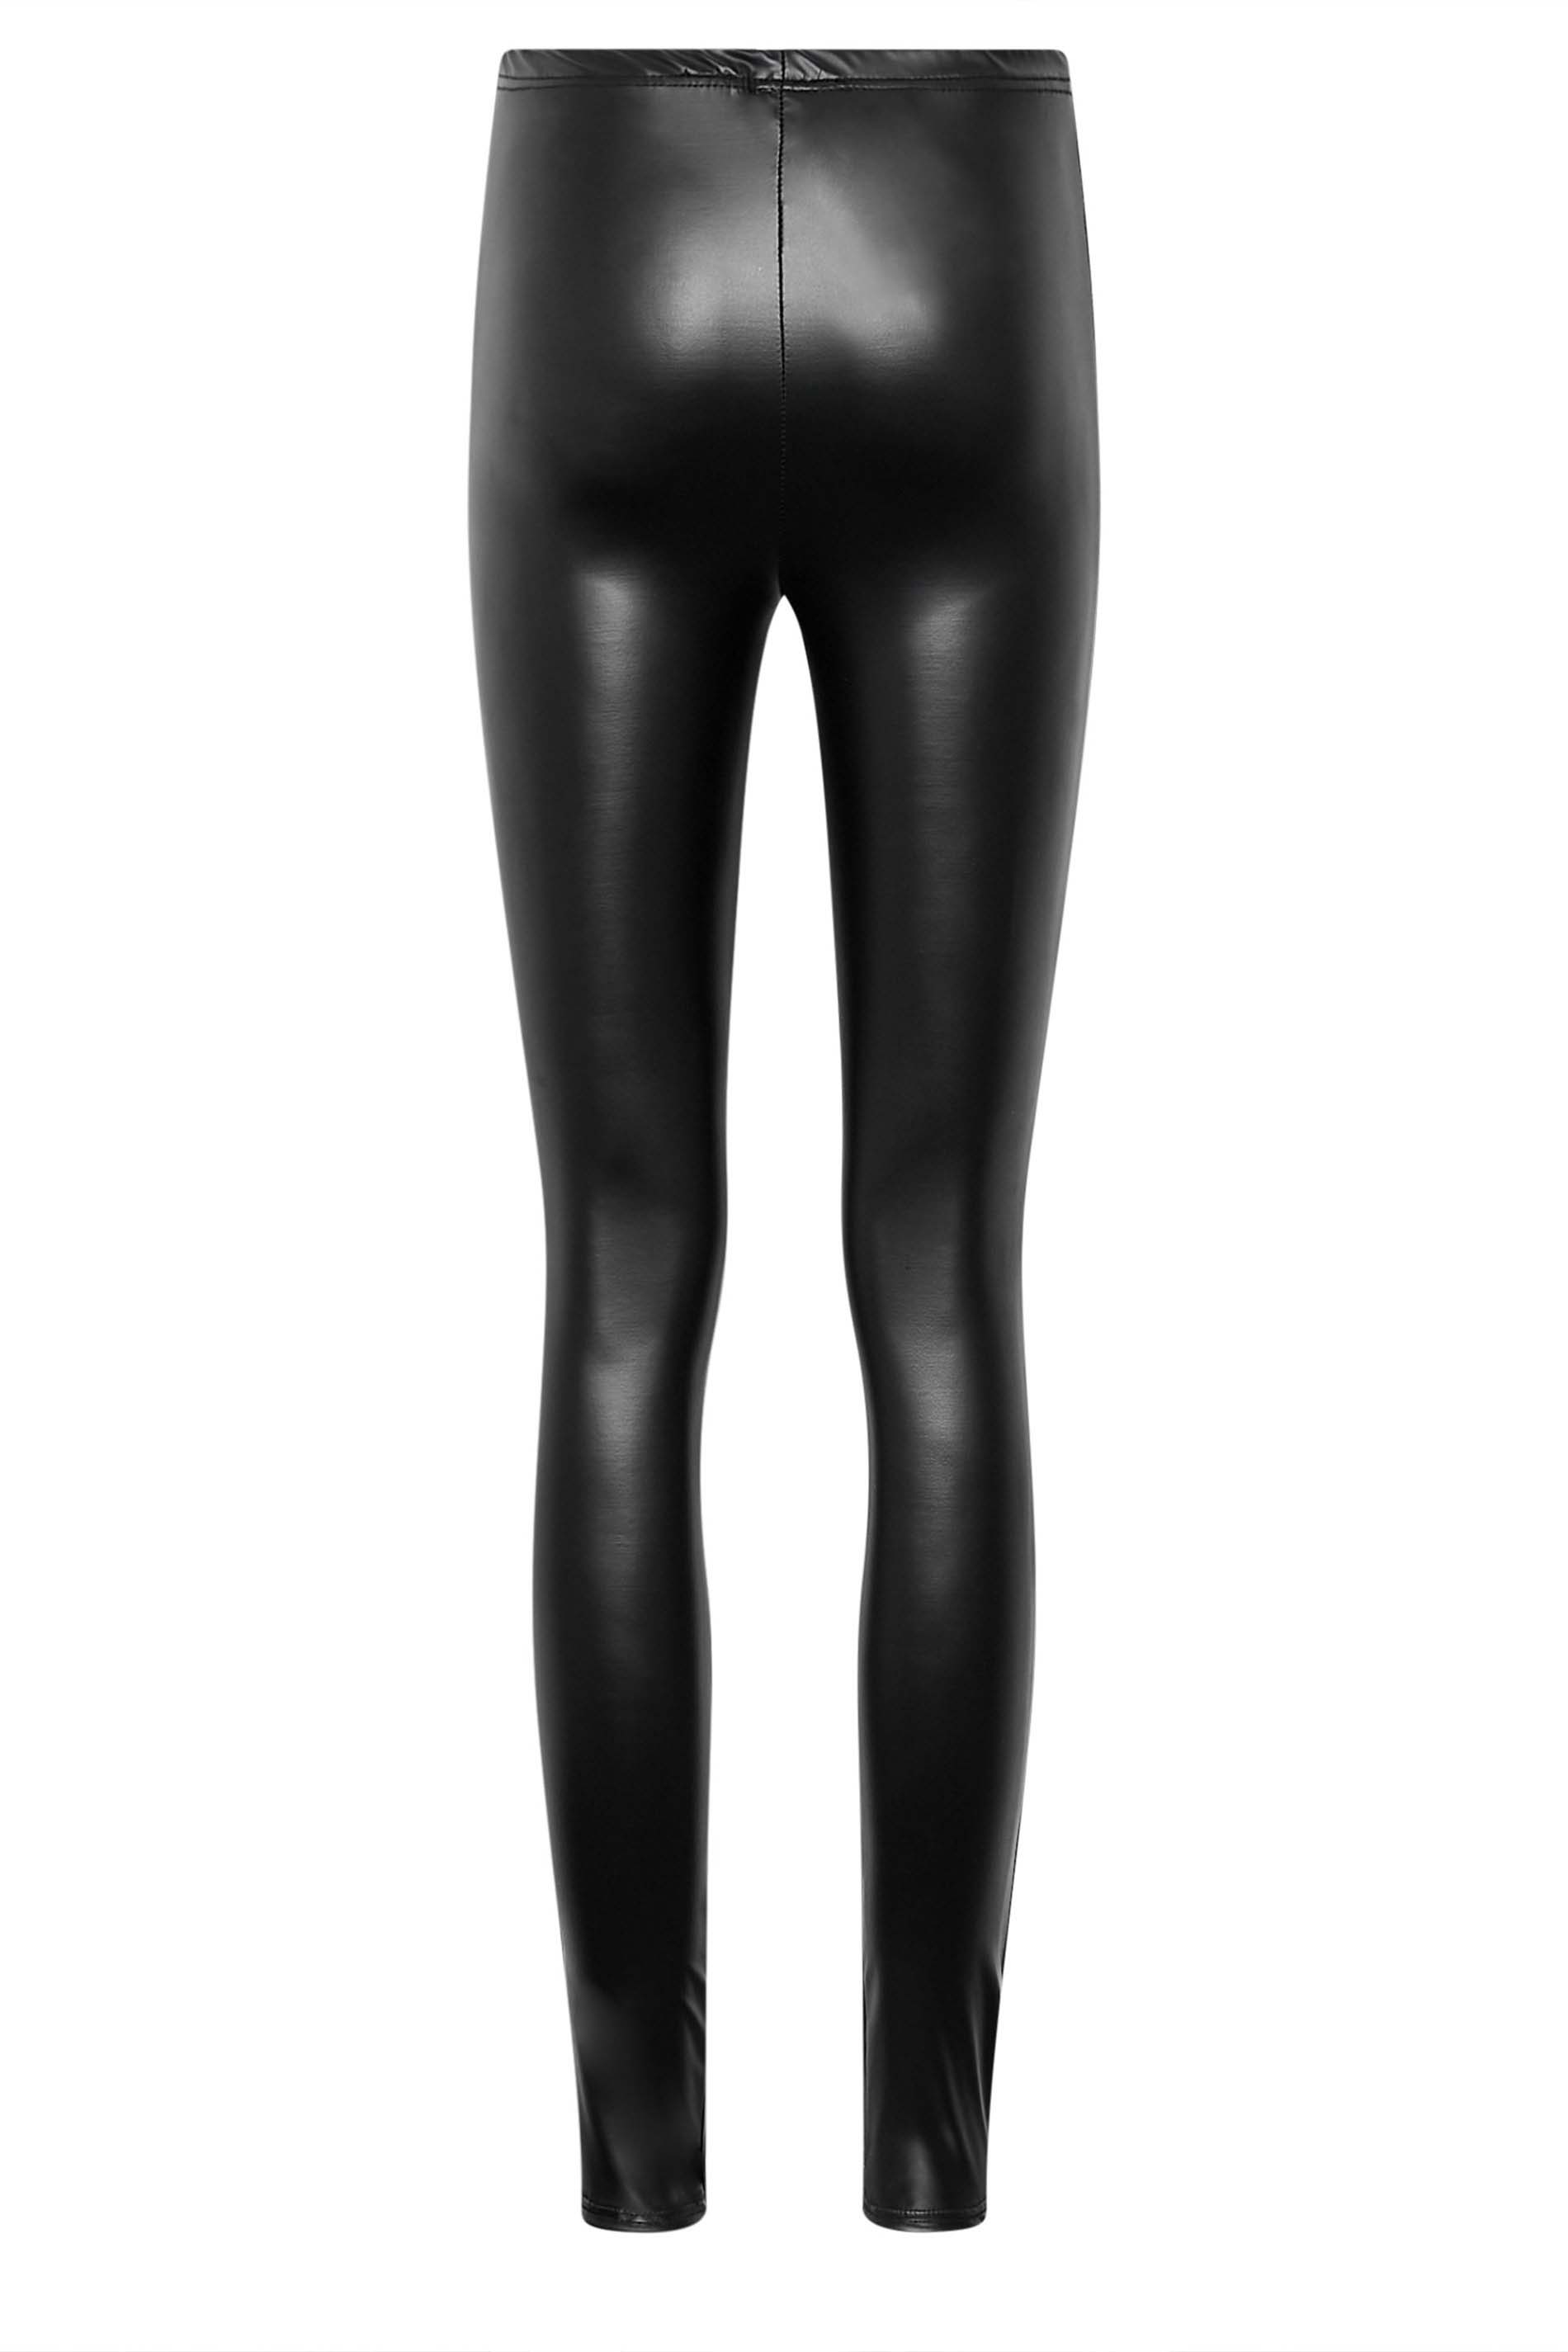 LTS Tall Women's Black Leather Look Leggings | Long Tall Sally